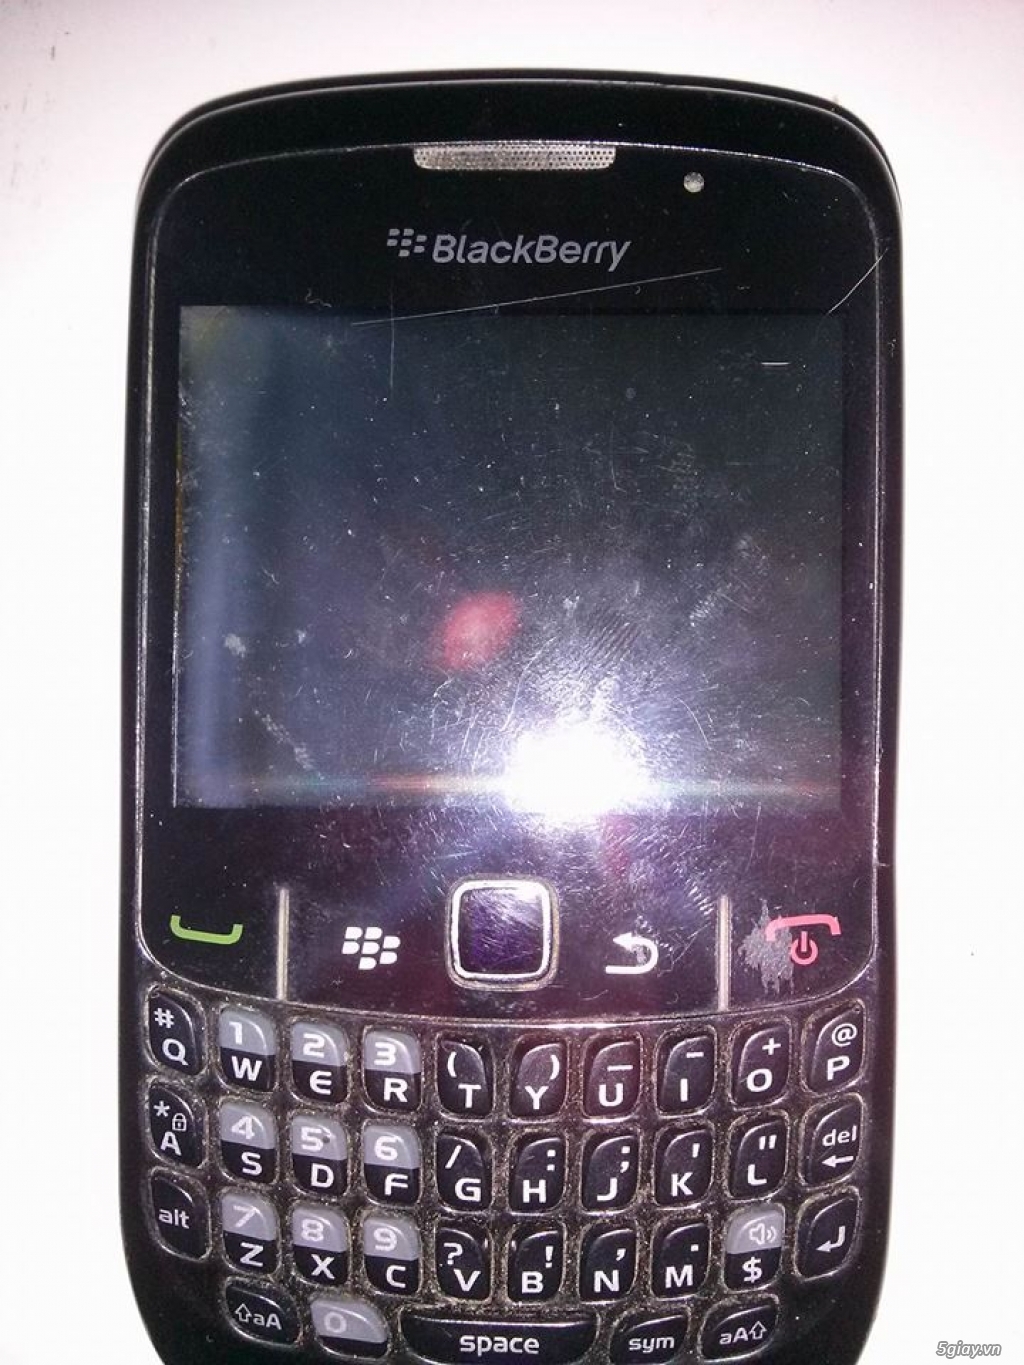 blackberry 6710,7290,8100,8300 lỗi nhẹ giá xác - 8